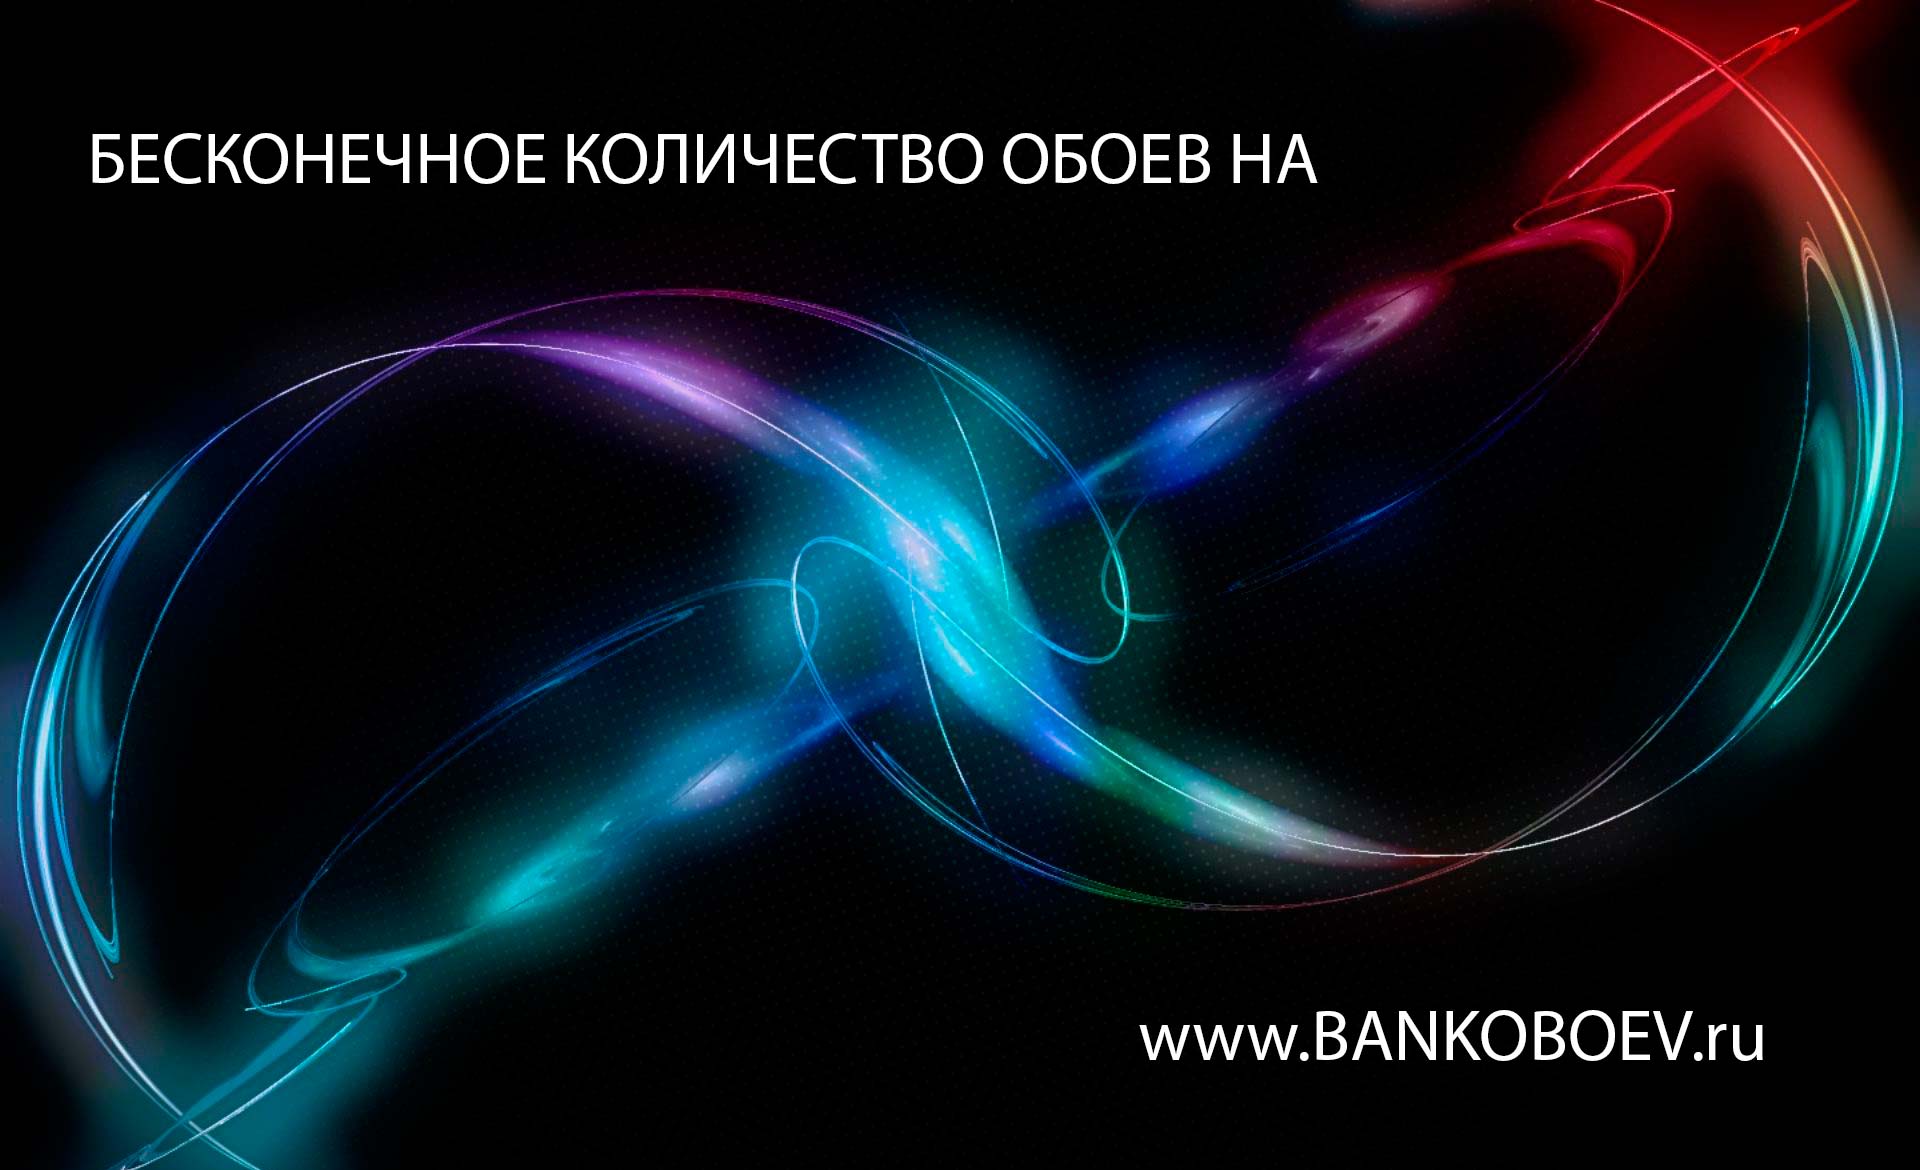 Source Bankoboev Ru Image Mze2mjq4